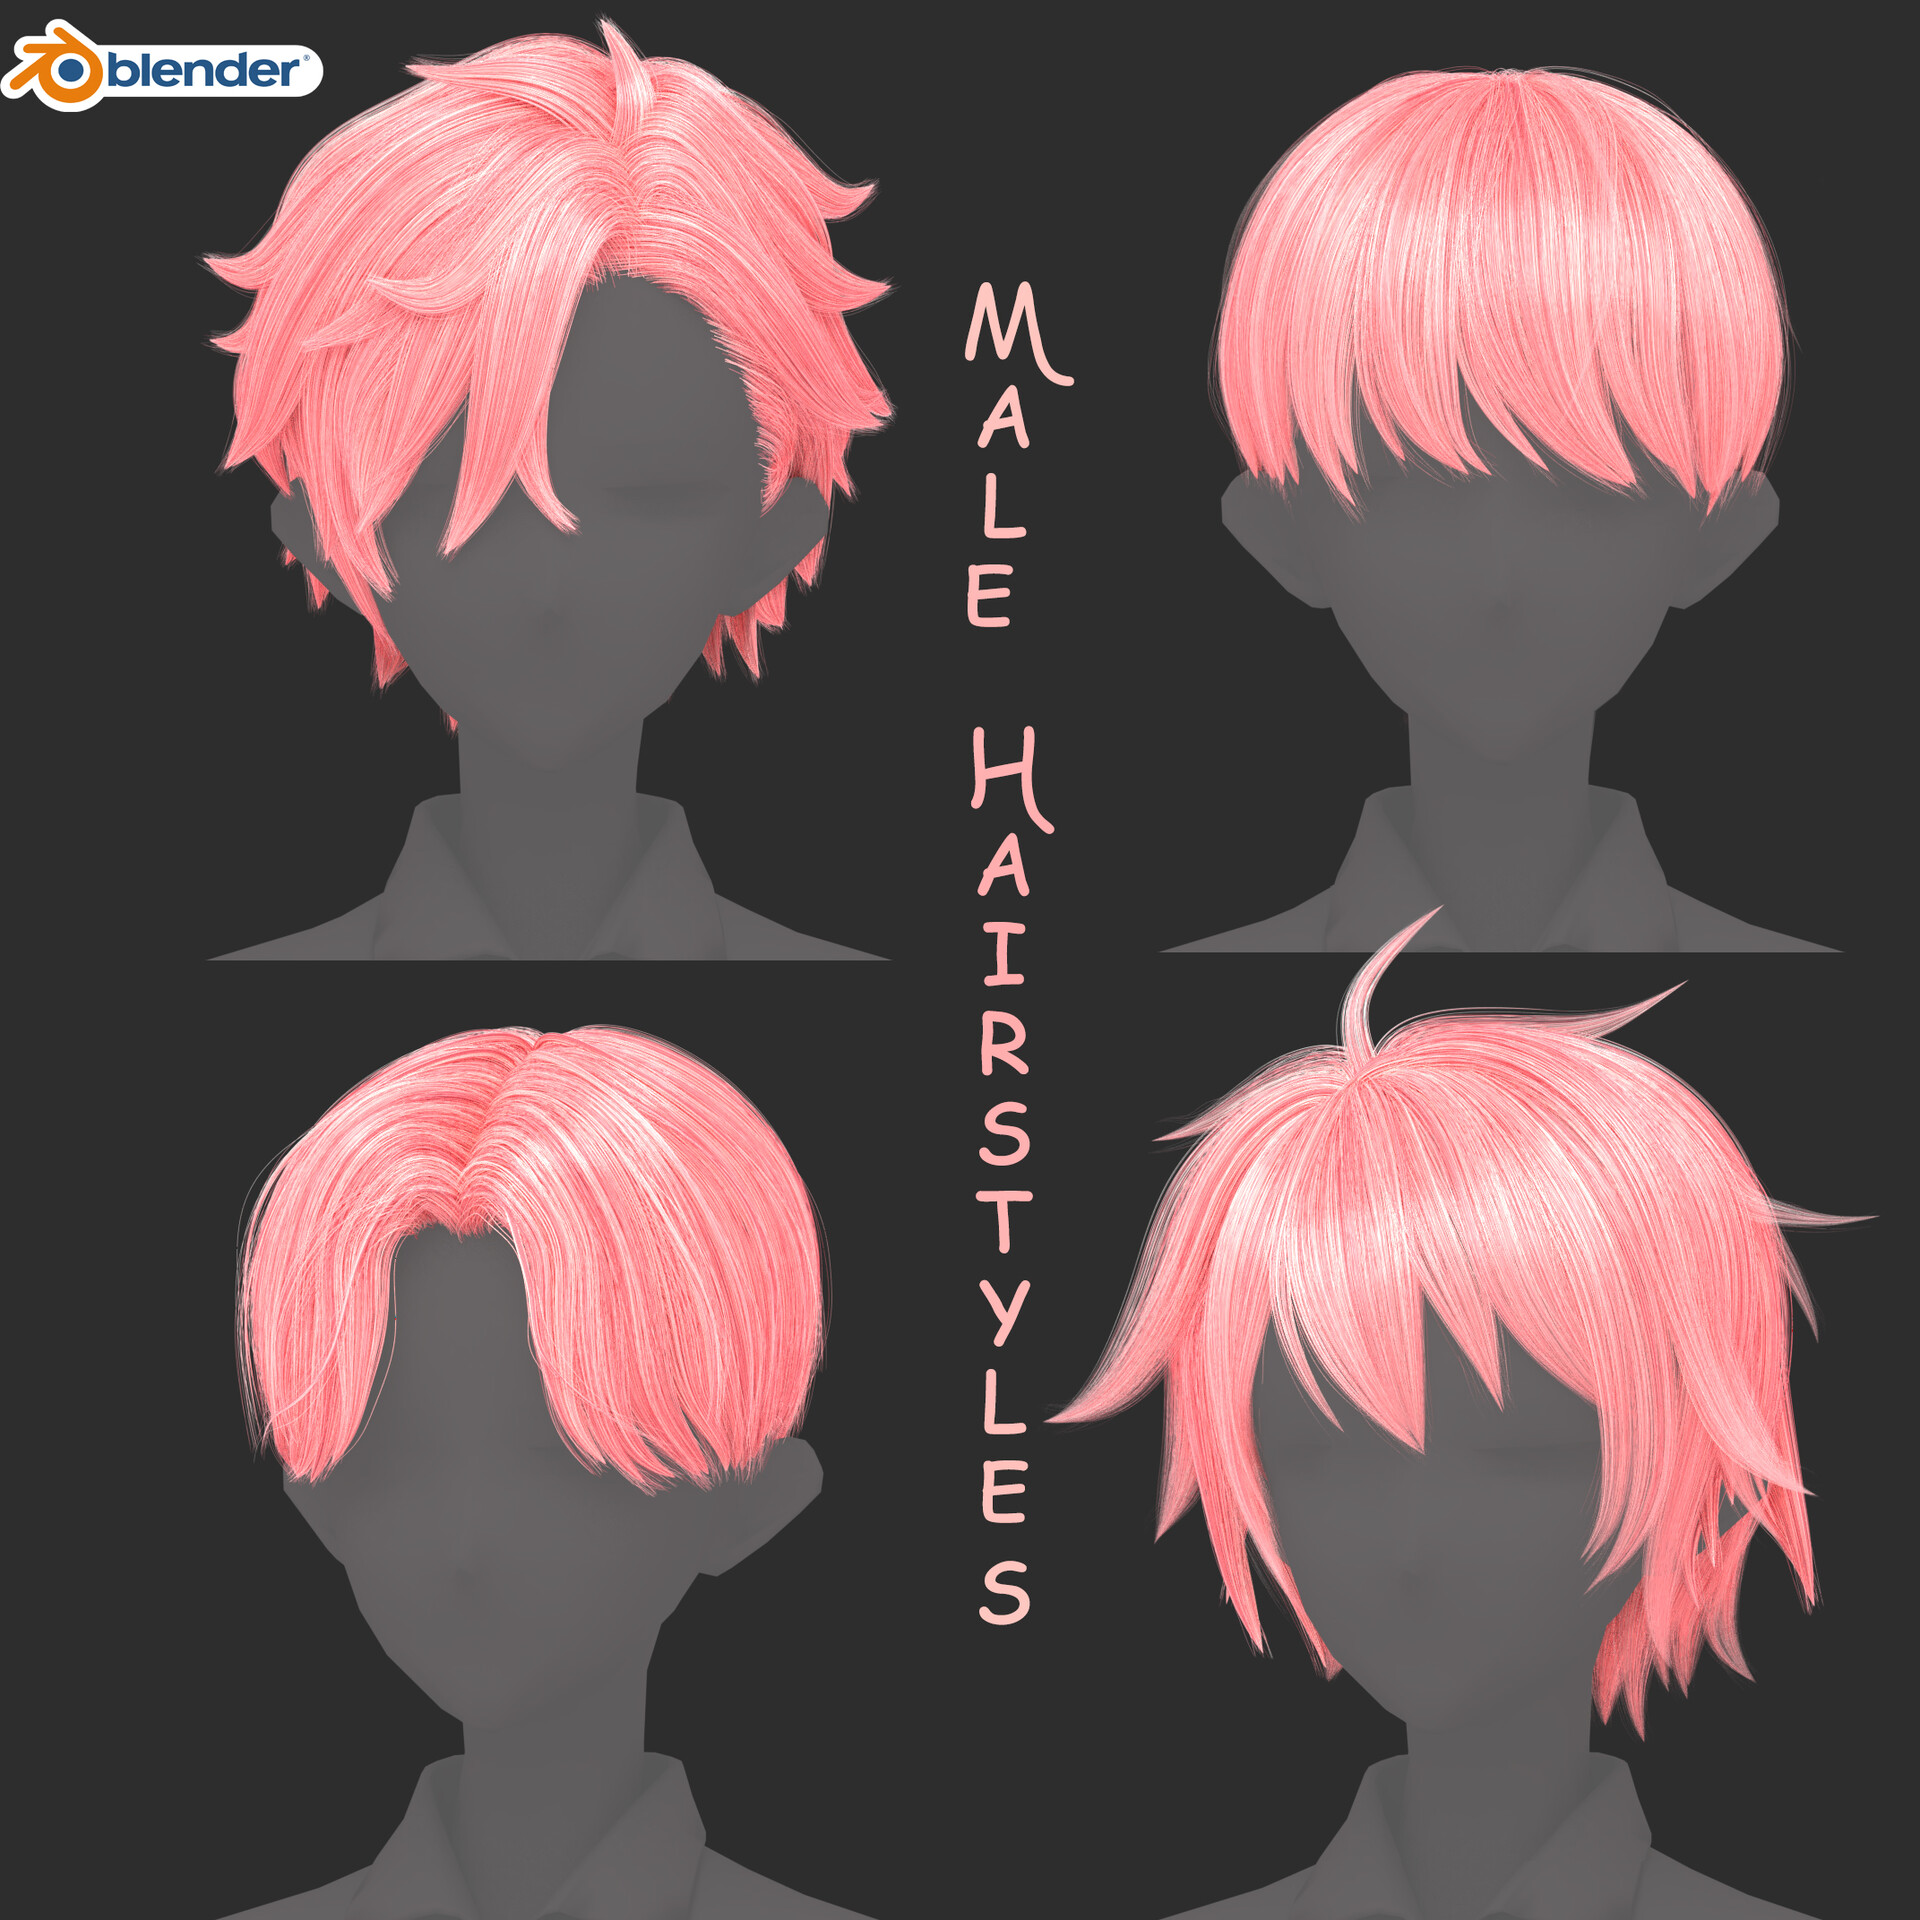 ArtStation - Anime Boy Hairstyles Pack